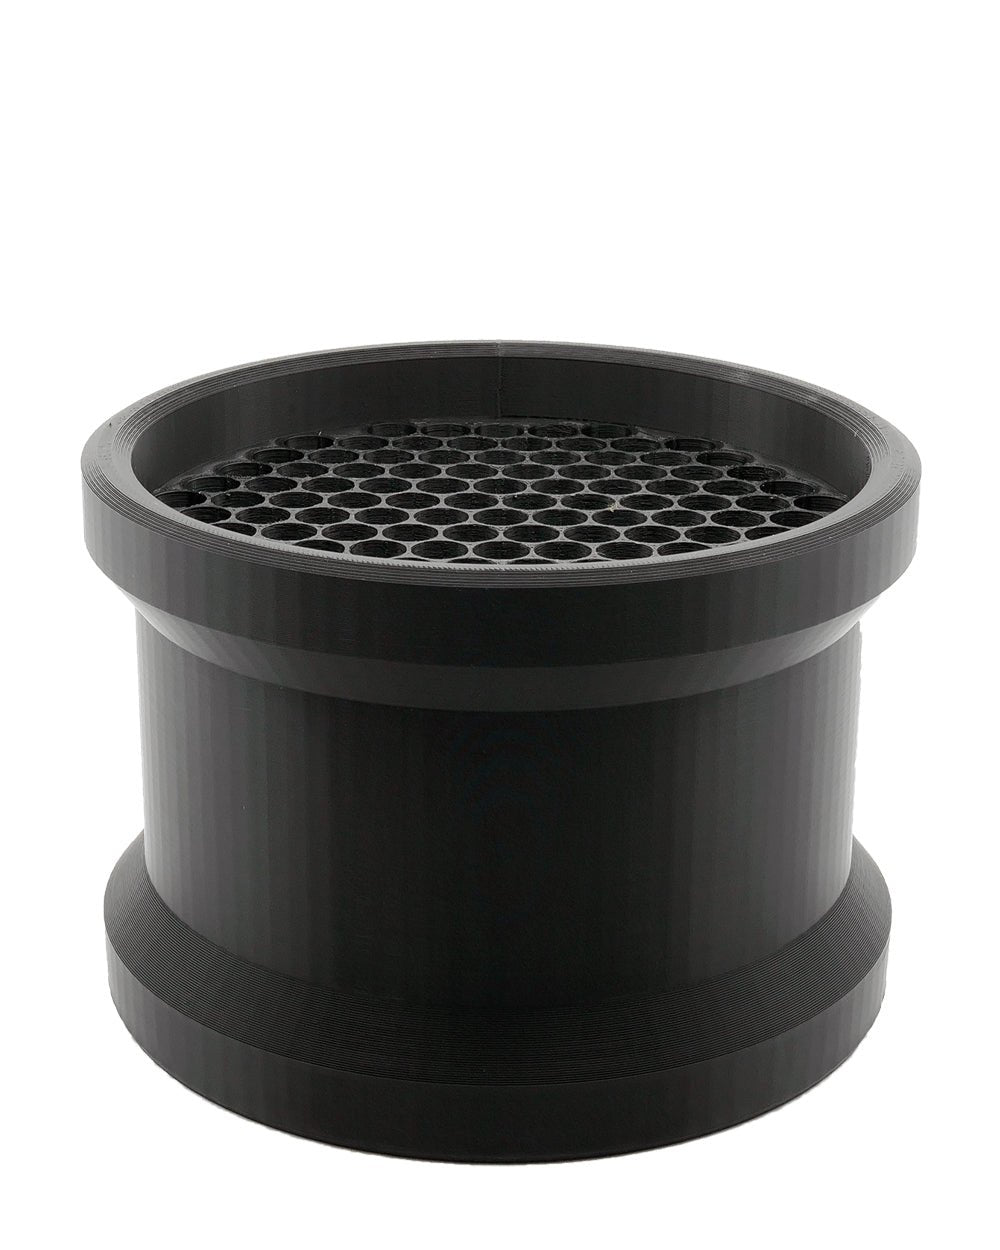 HUMBOLDT | Black Pre-Rolled Cones Filling Machine Starter Kit 109mm | Fill 121 Cones Per Run - 3